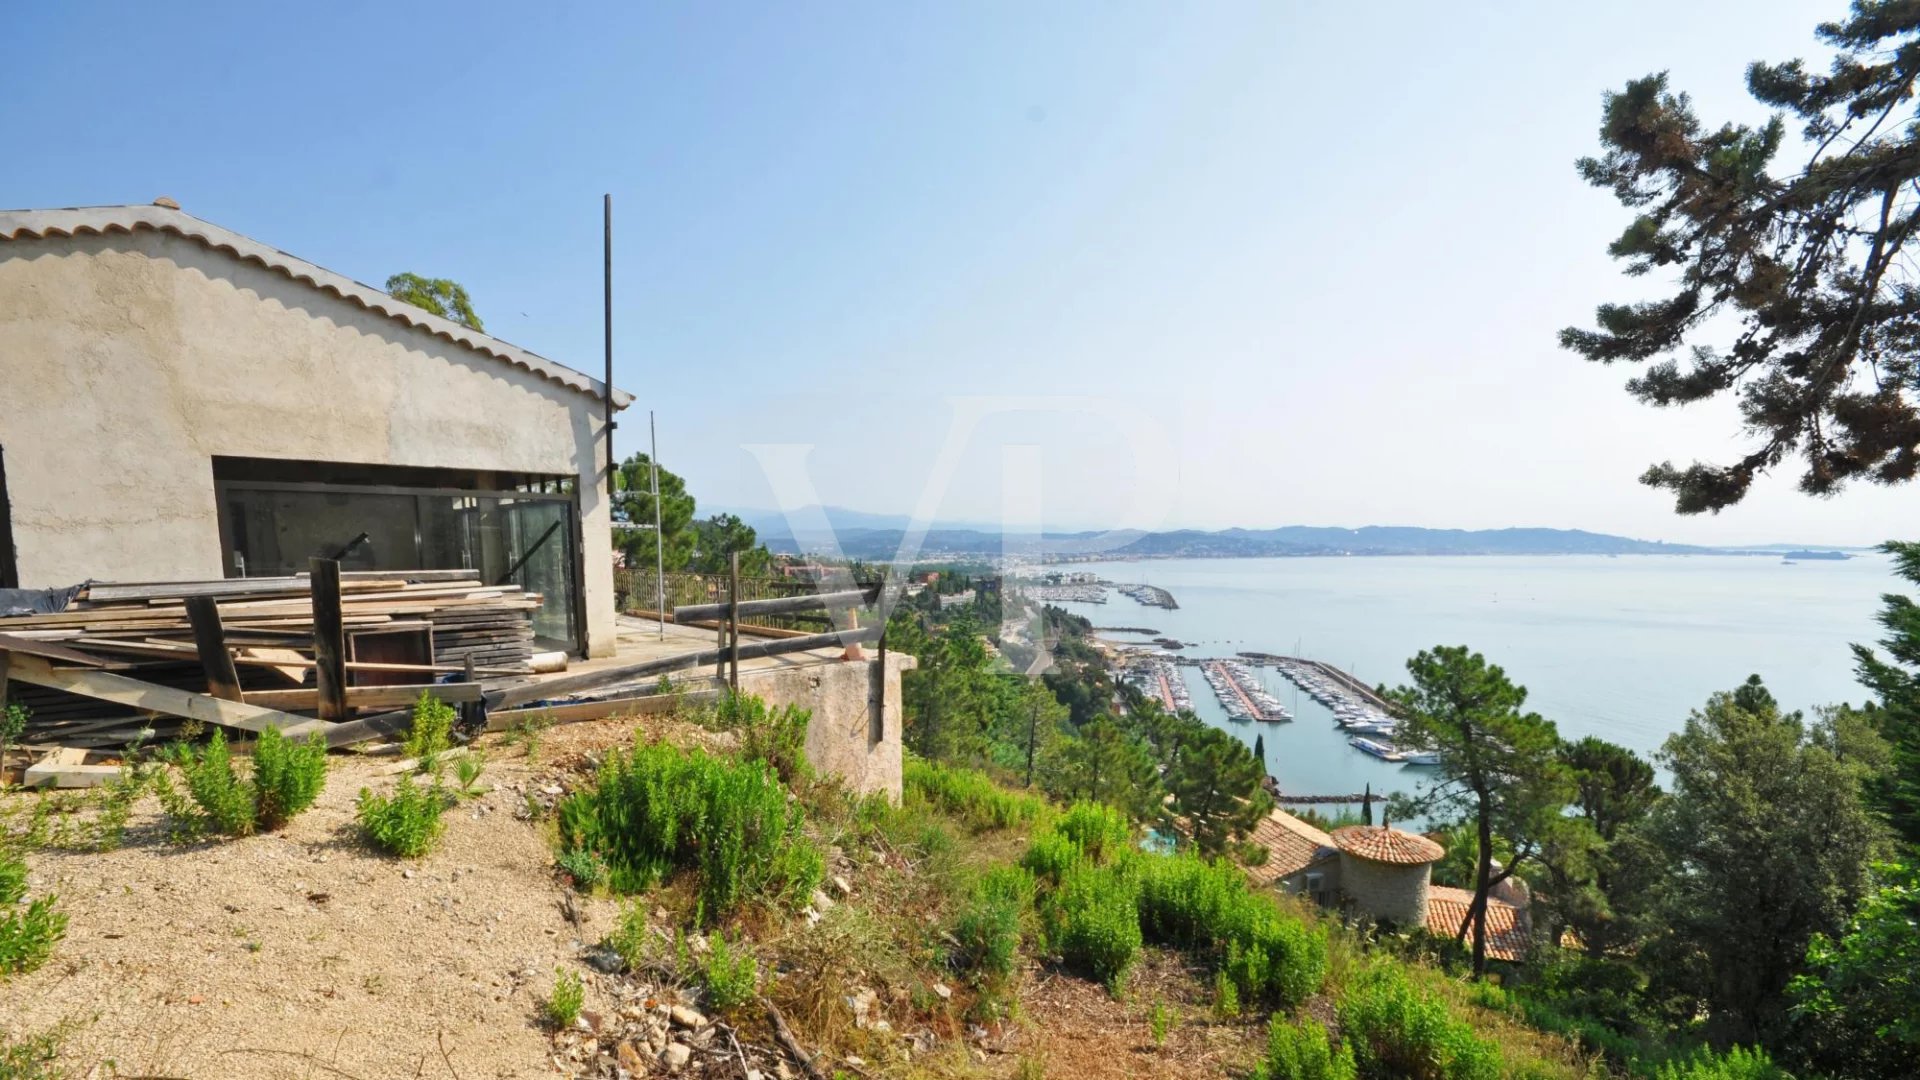 Villa project with 180 degree sea view